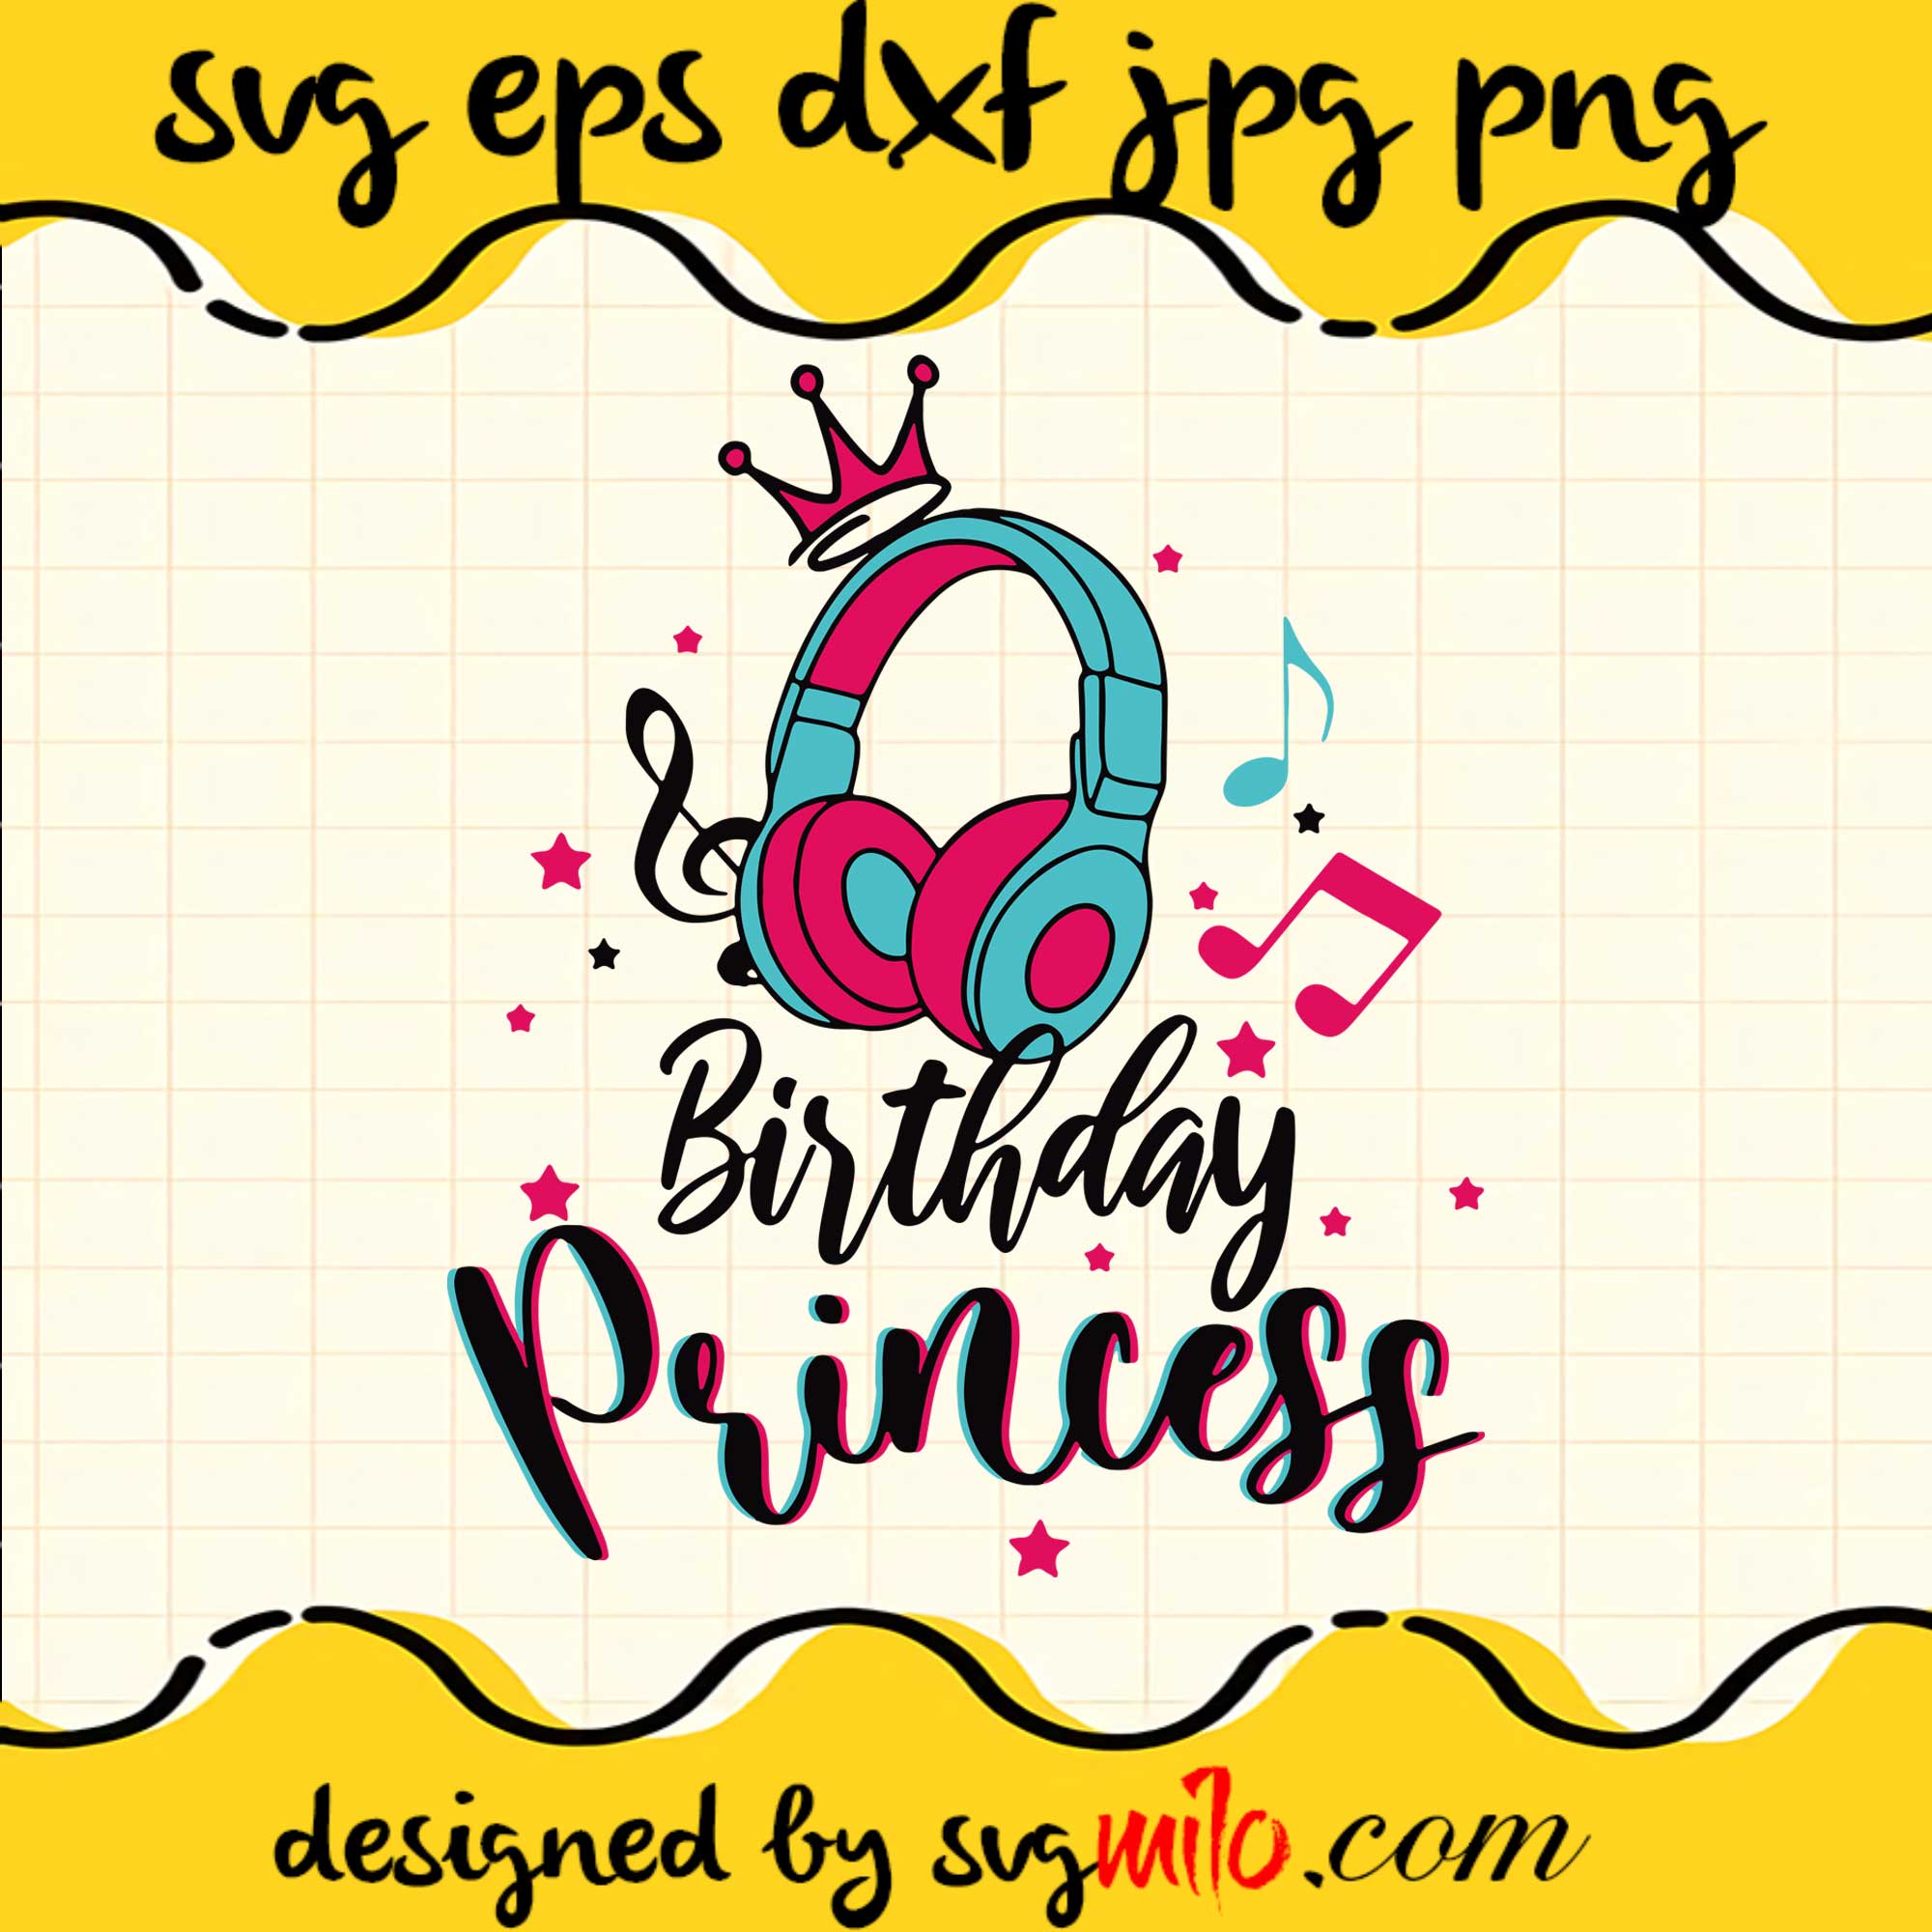 Tik Tok Birthday Princess SVG PNG DXF EPS Cut Files For Cricut Silhouette,Premium quality SVG - SVGMILO